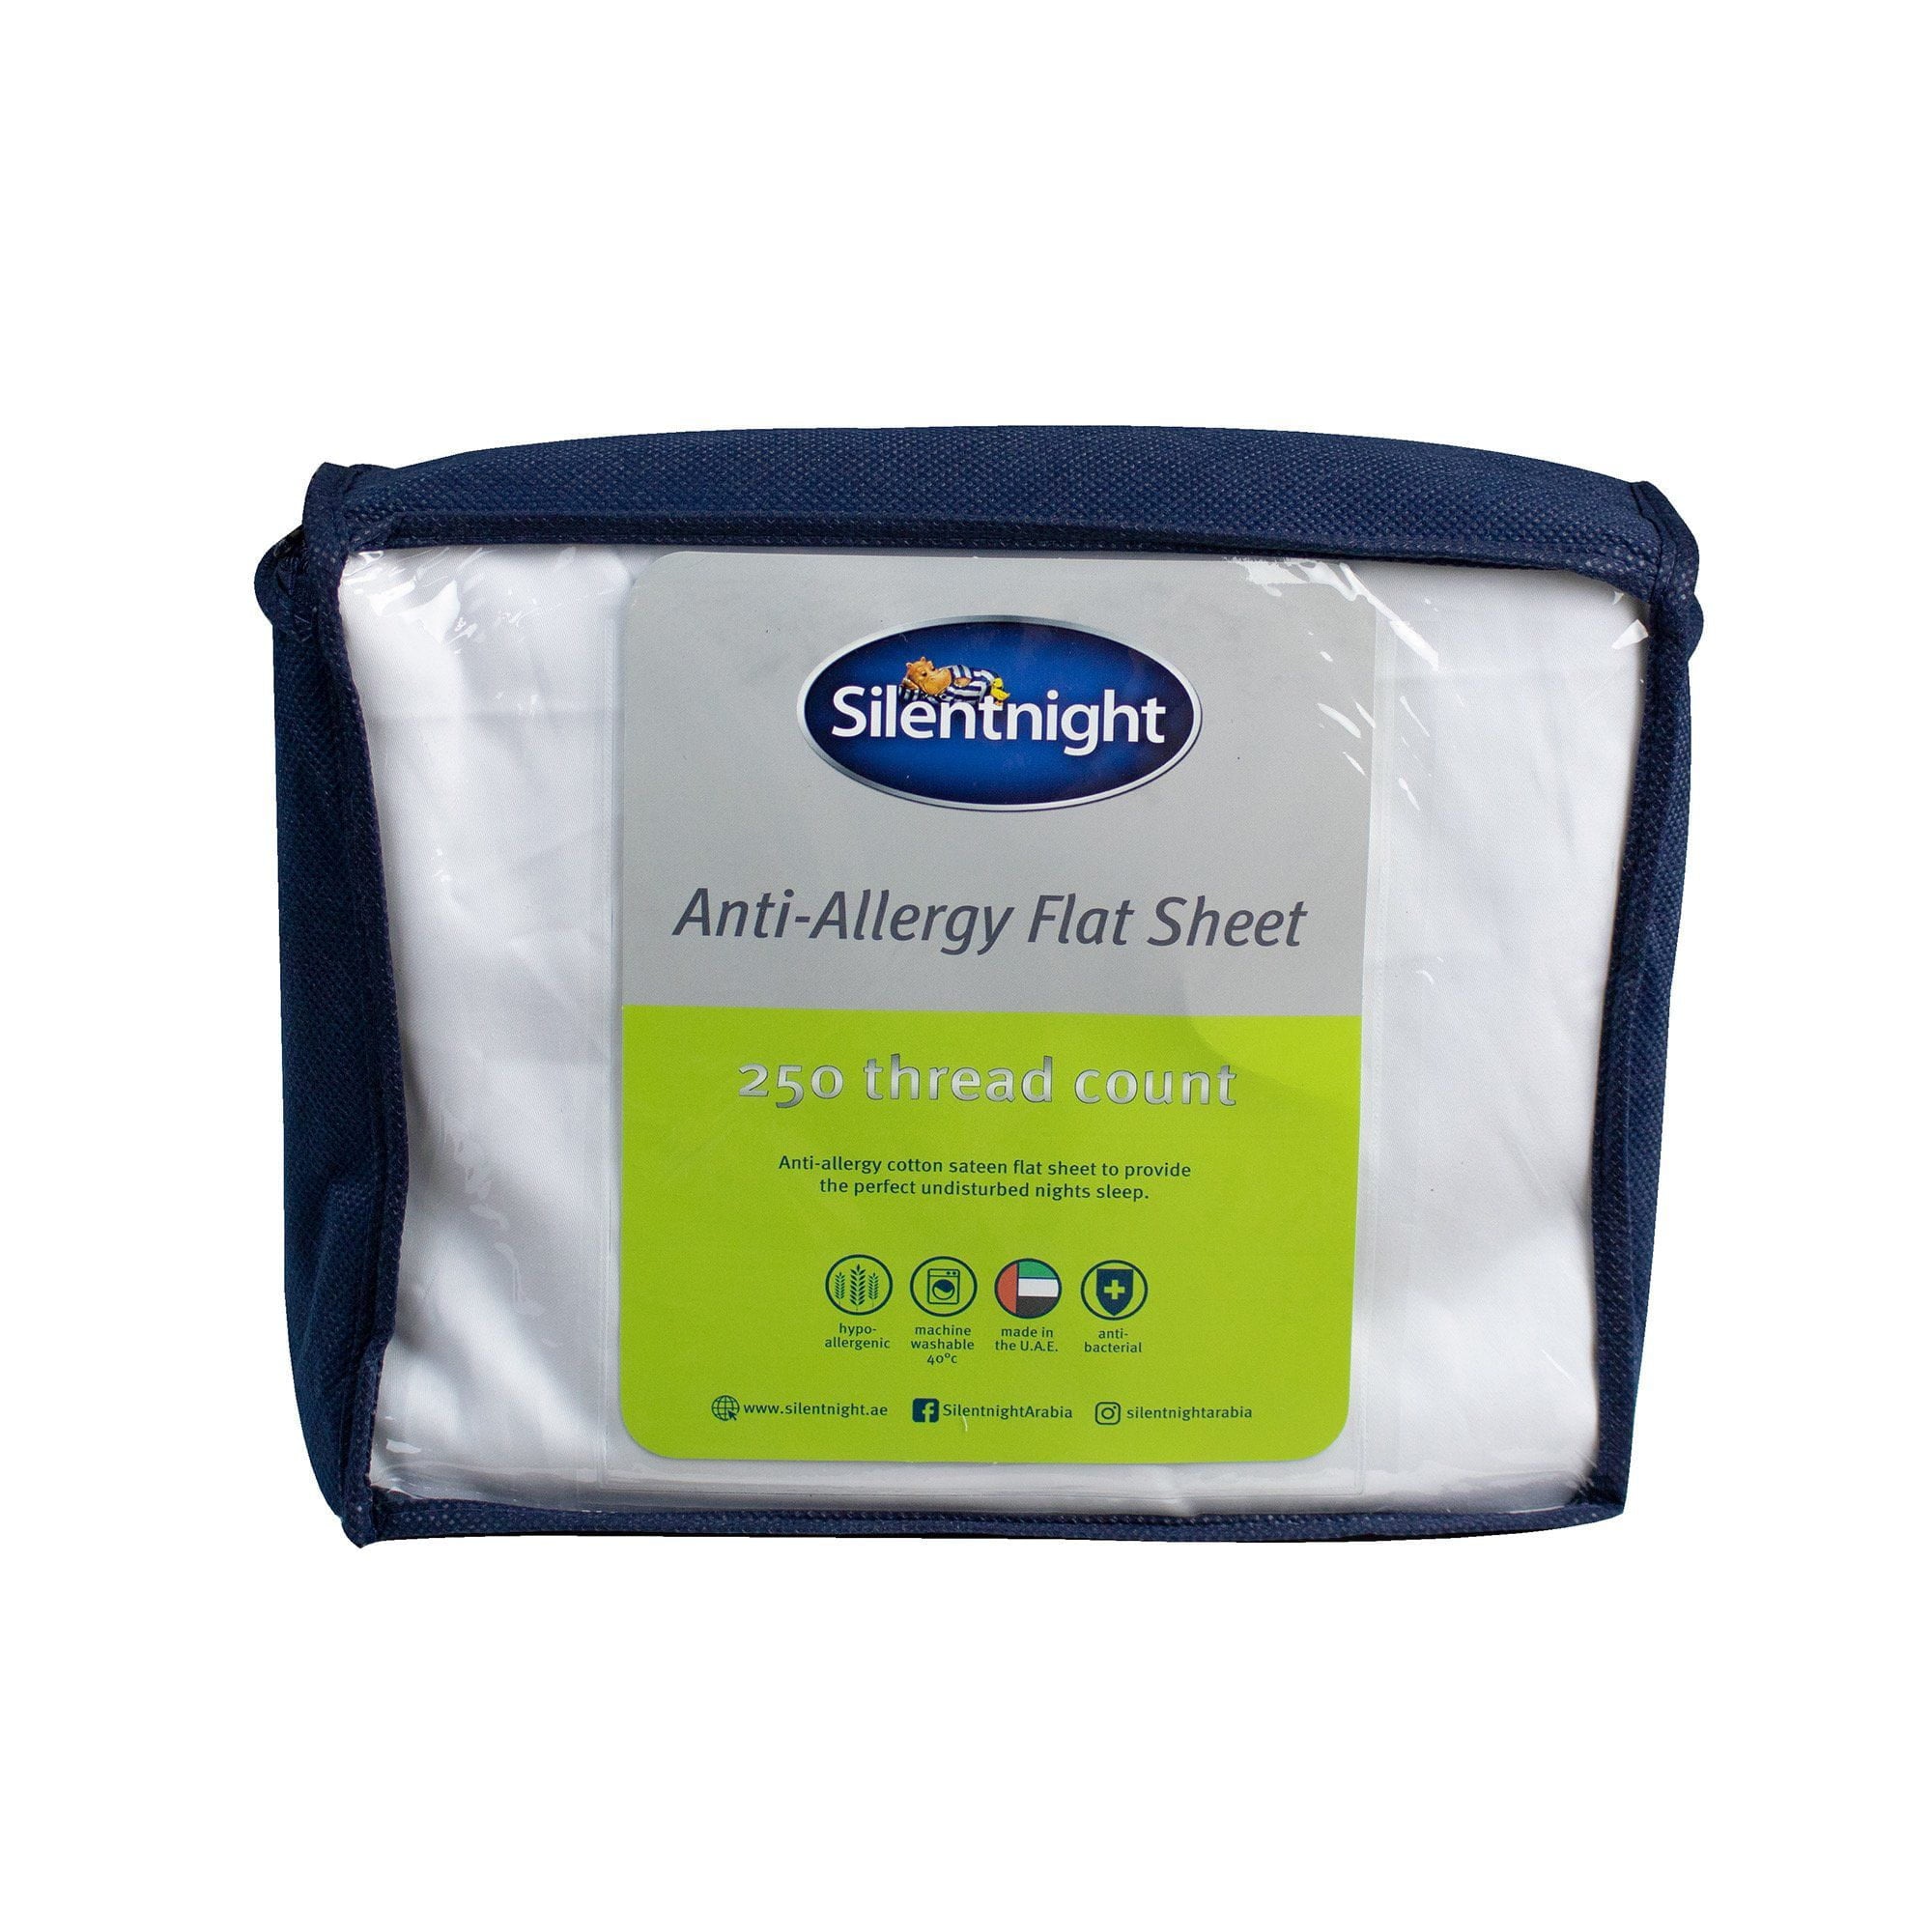 Anti-Allergy Flat Sheet